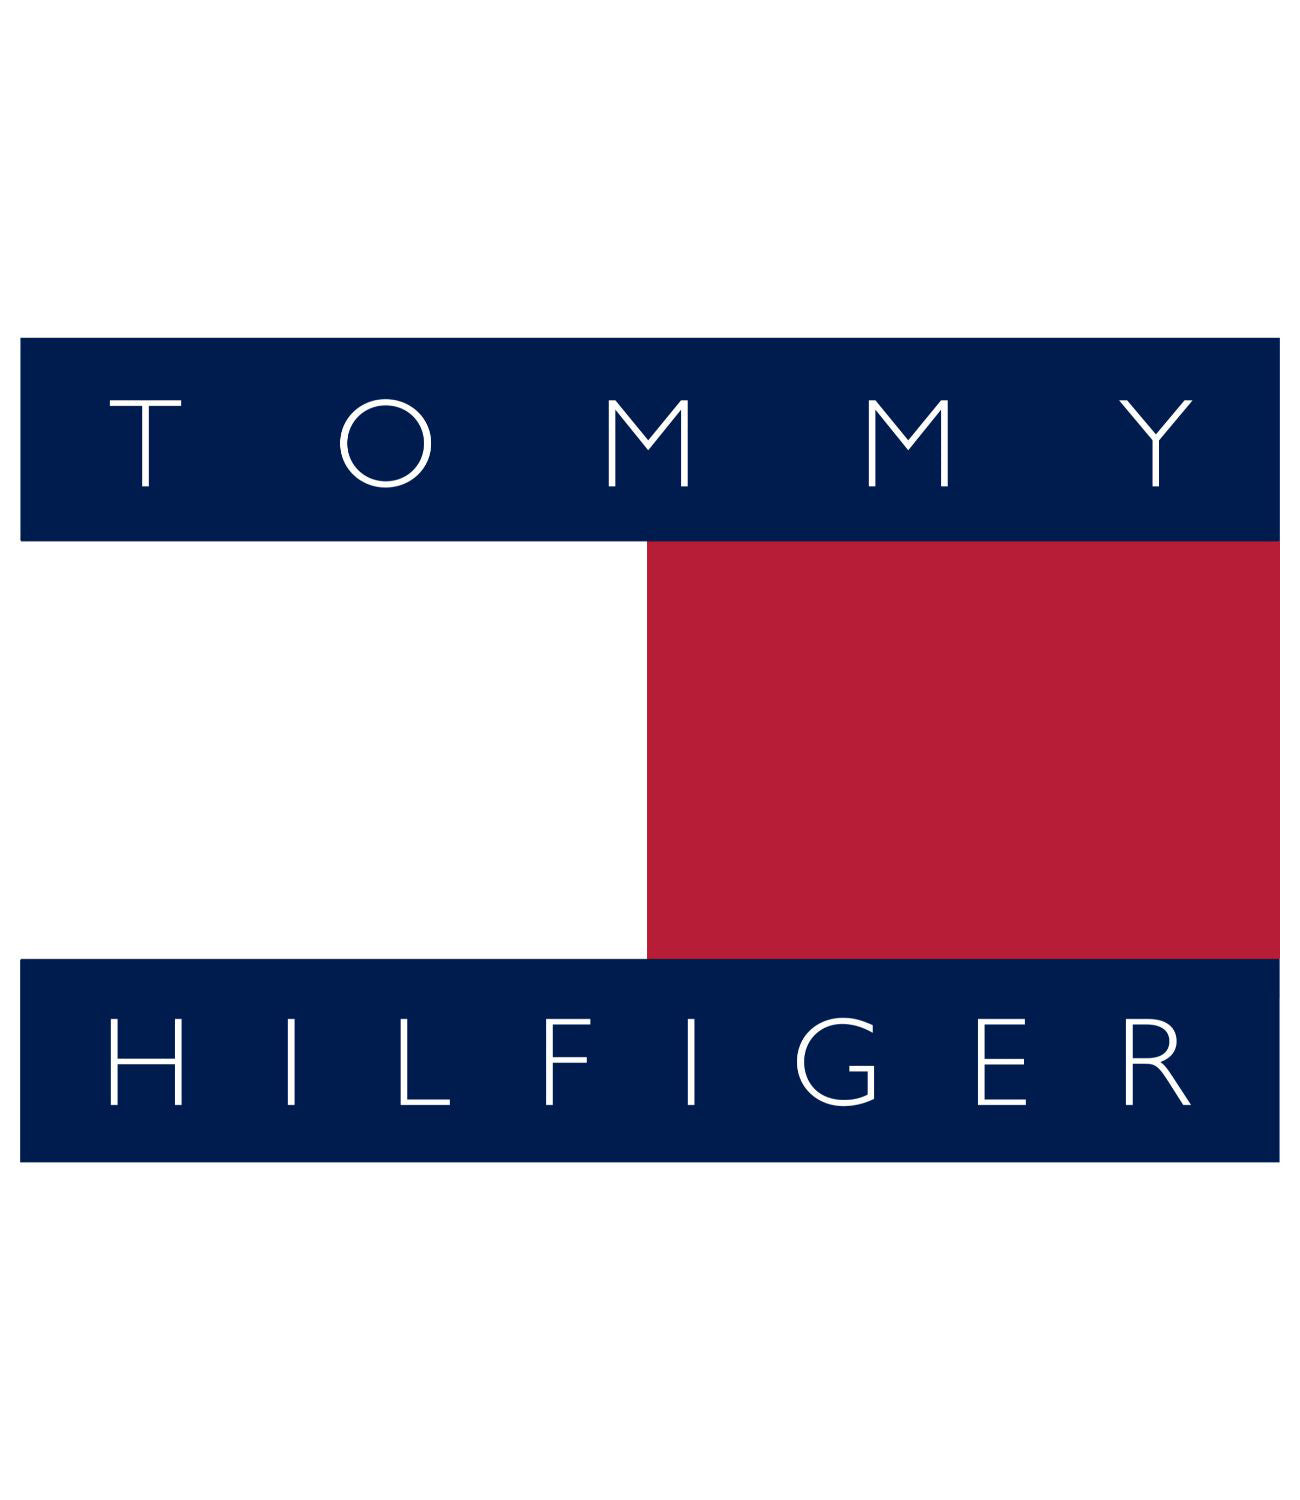 Tommy Hilfiger Boys 4-7 Tommy Logo T-Shirt